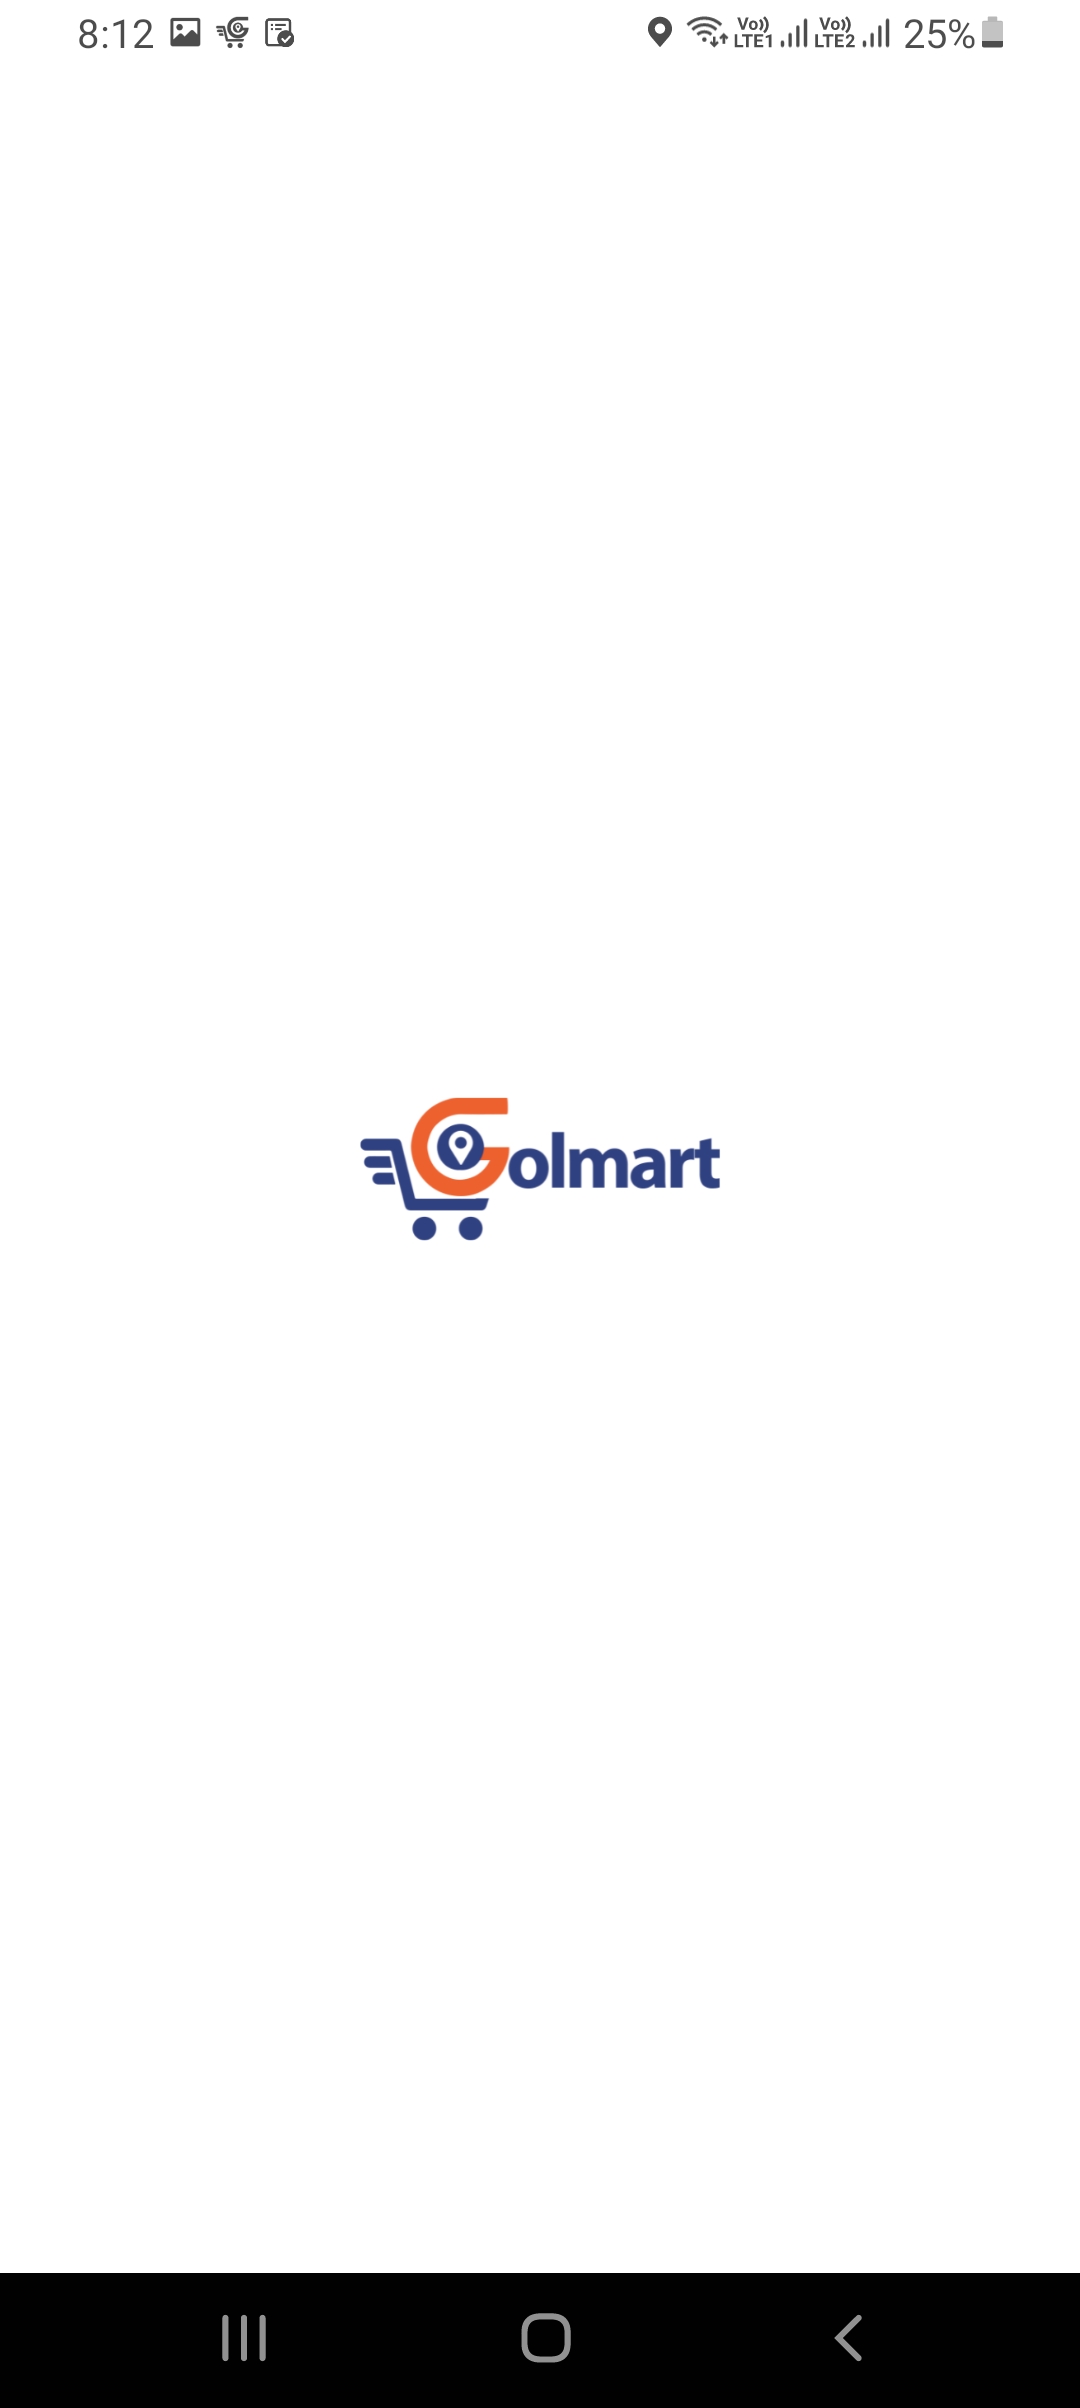 Golmart (India) on databroker